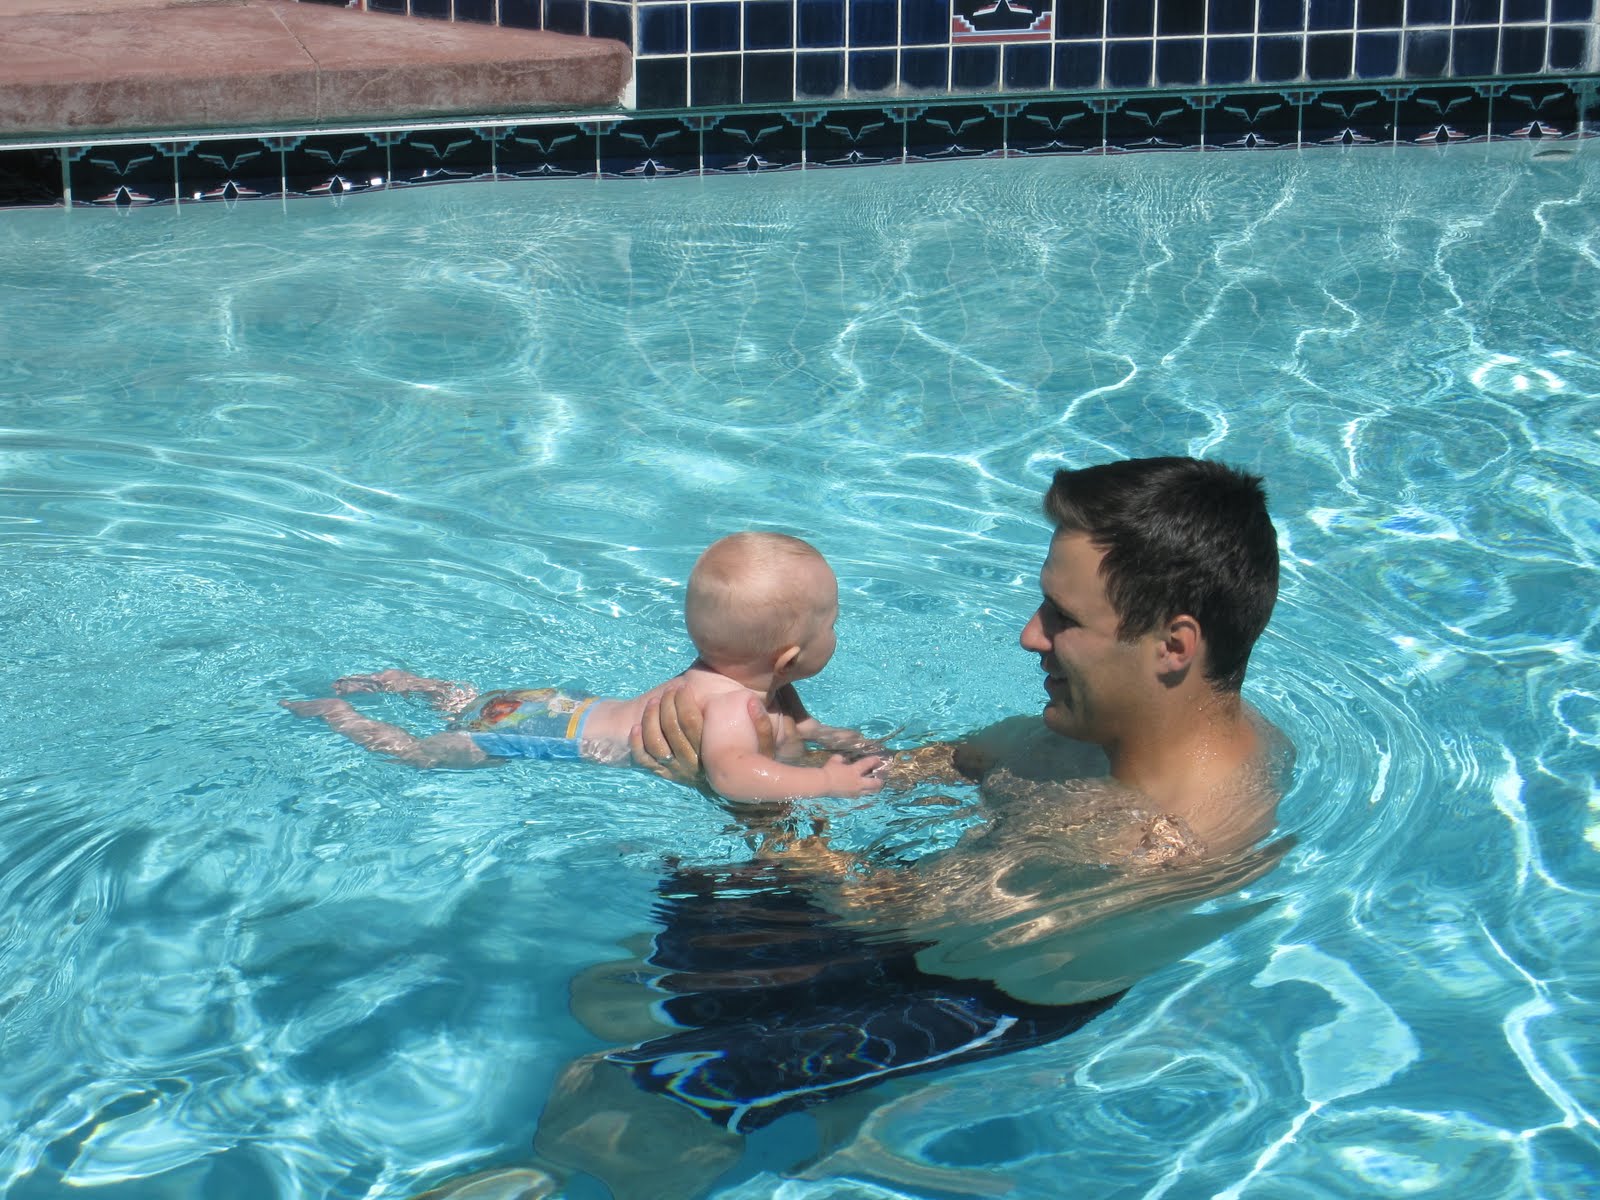 [Gavin+swims+too.JPG]